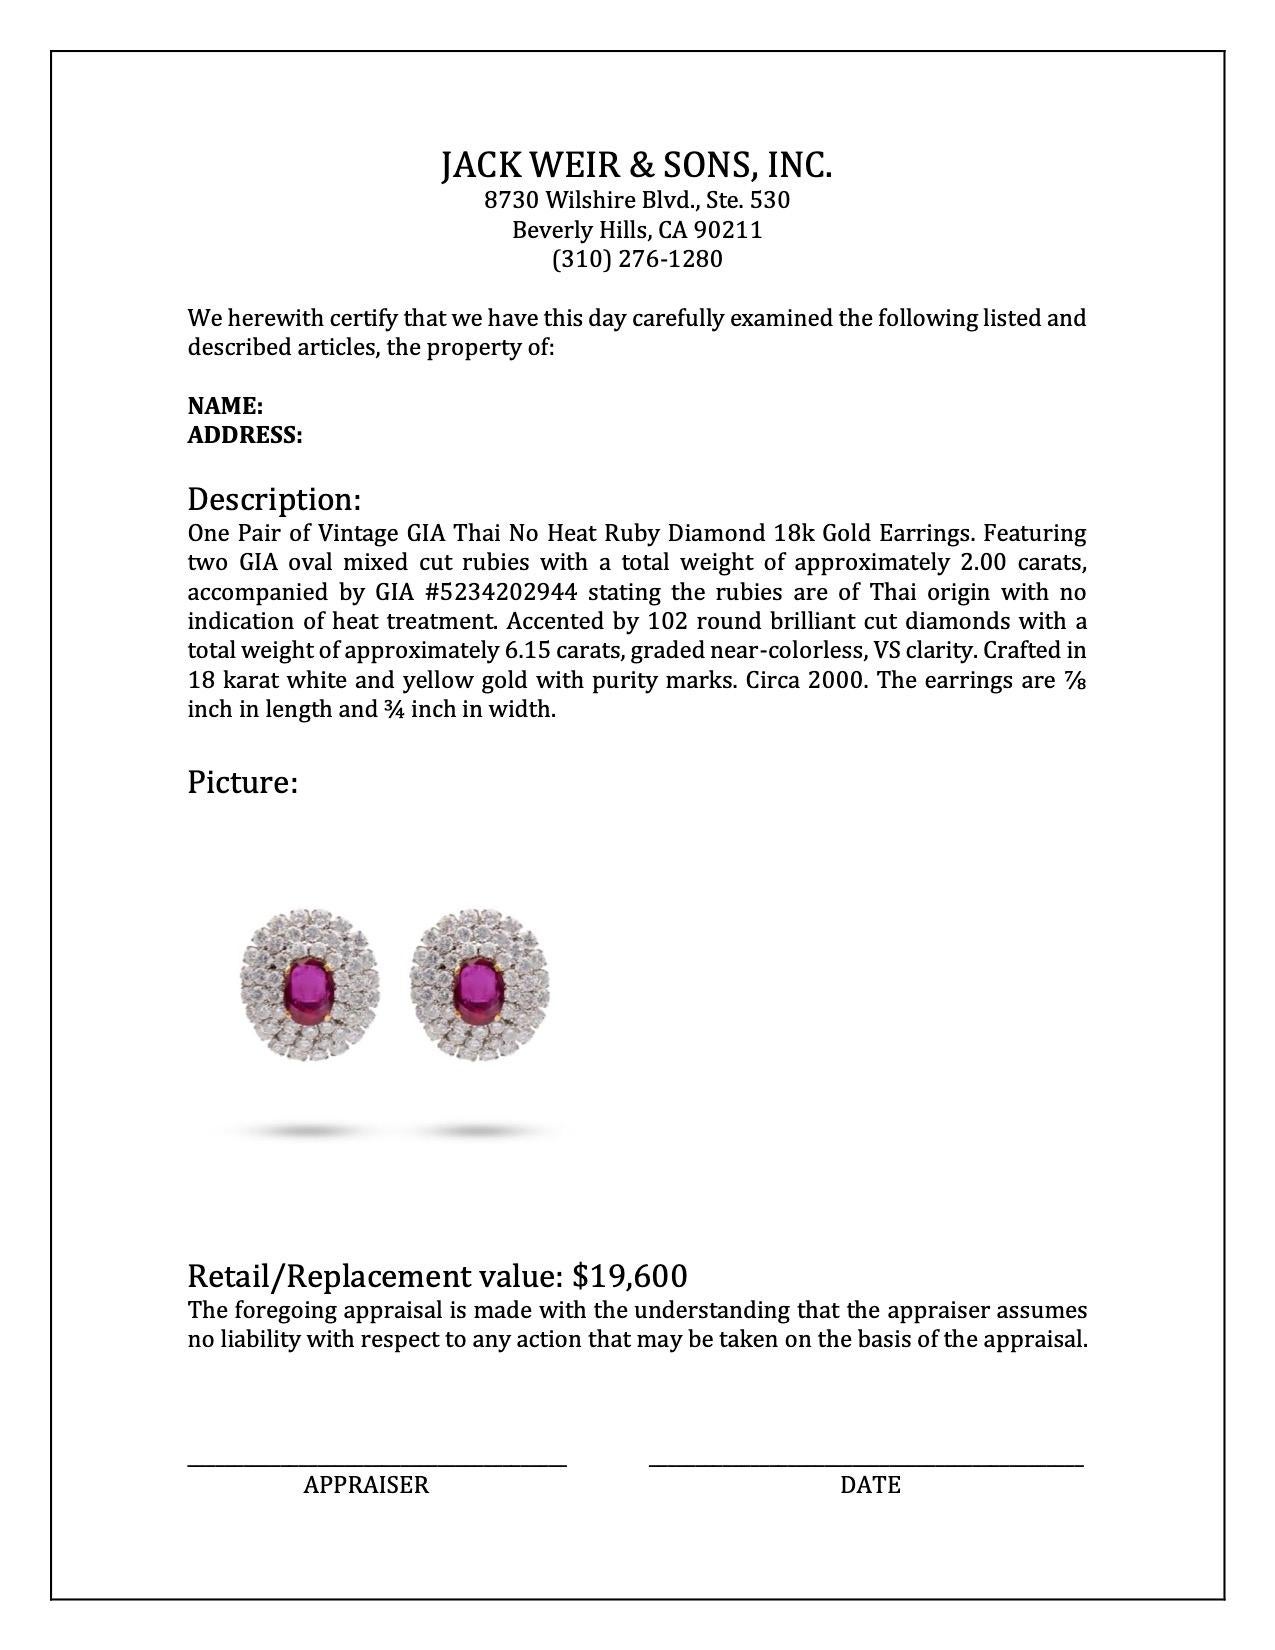 Women's or Men's Vintage GIA Thai No Heat Ruby Diamond 18k Gold Earrings For Sale